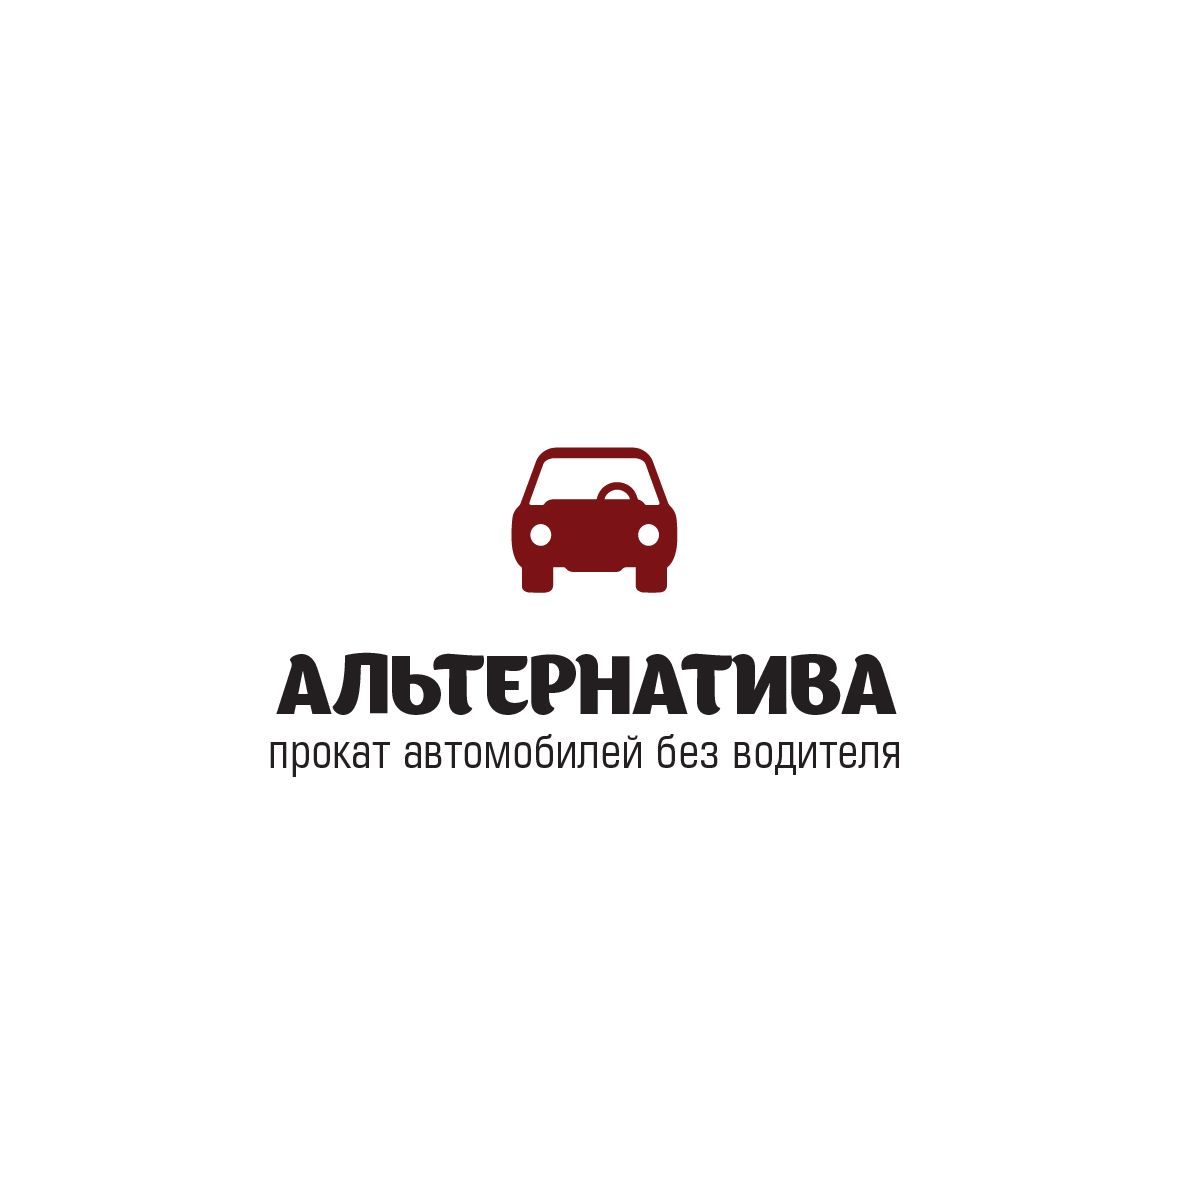 Логотип для проката автомобилей - дизайнер as_fi